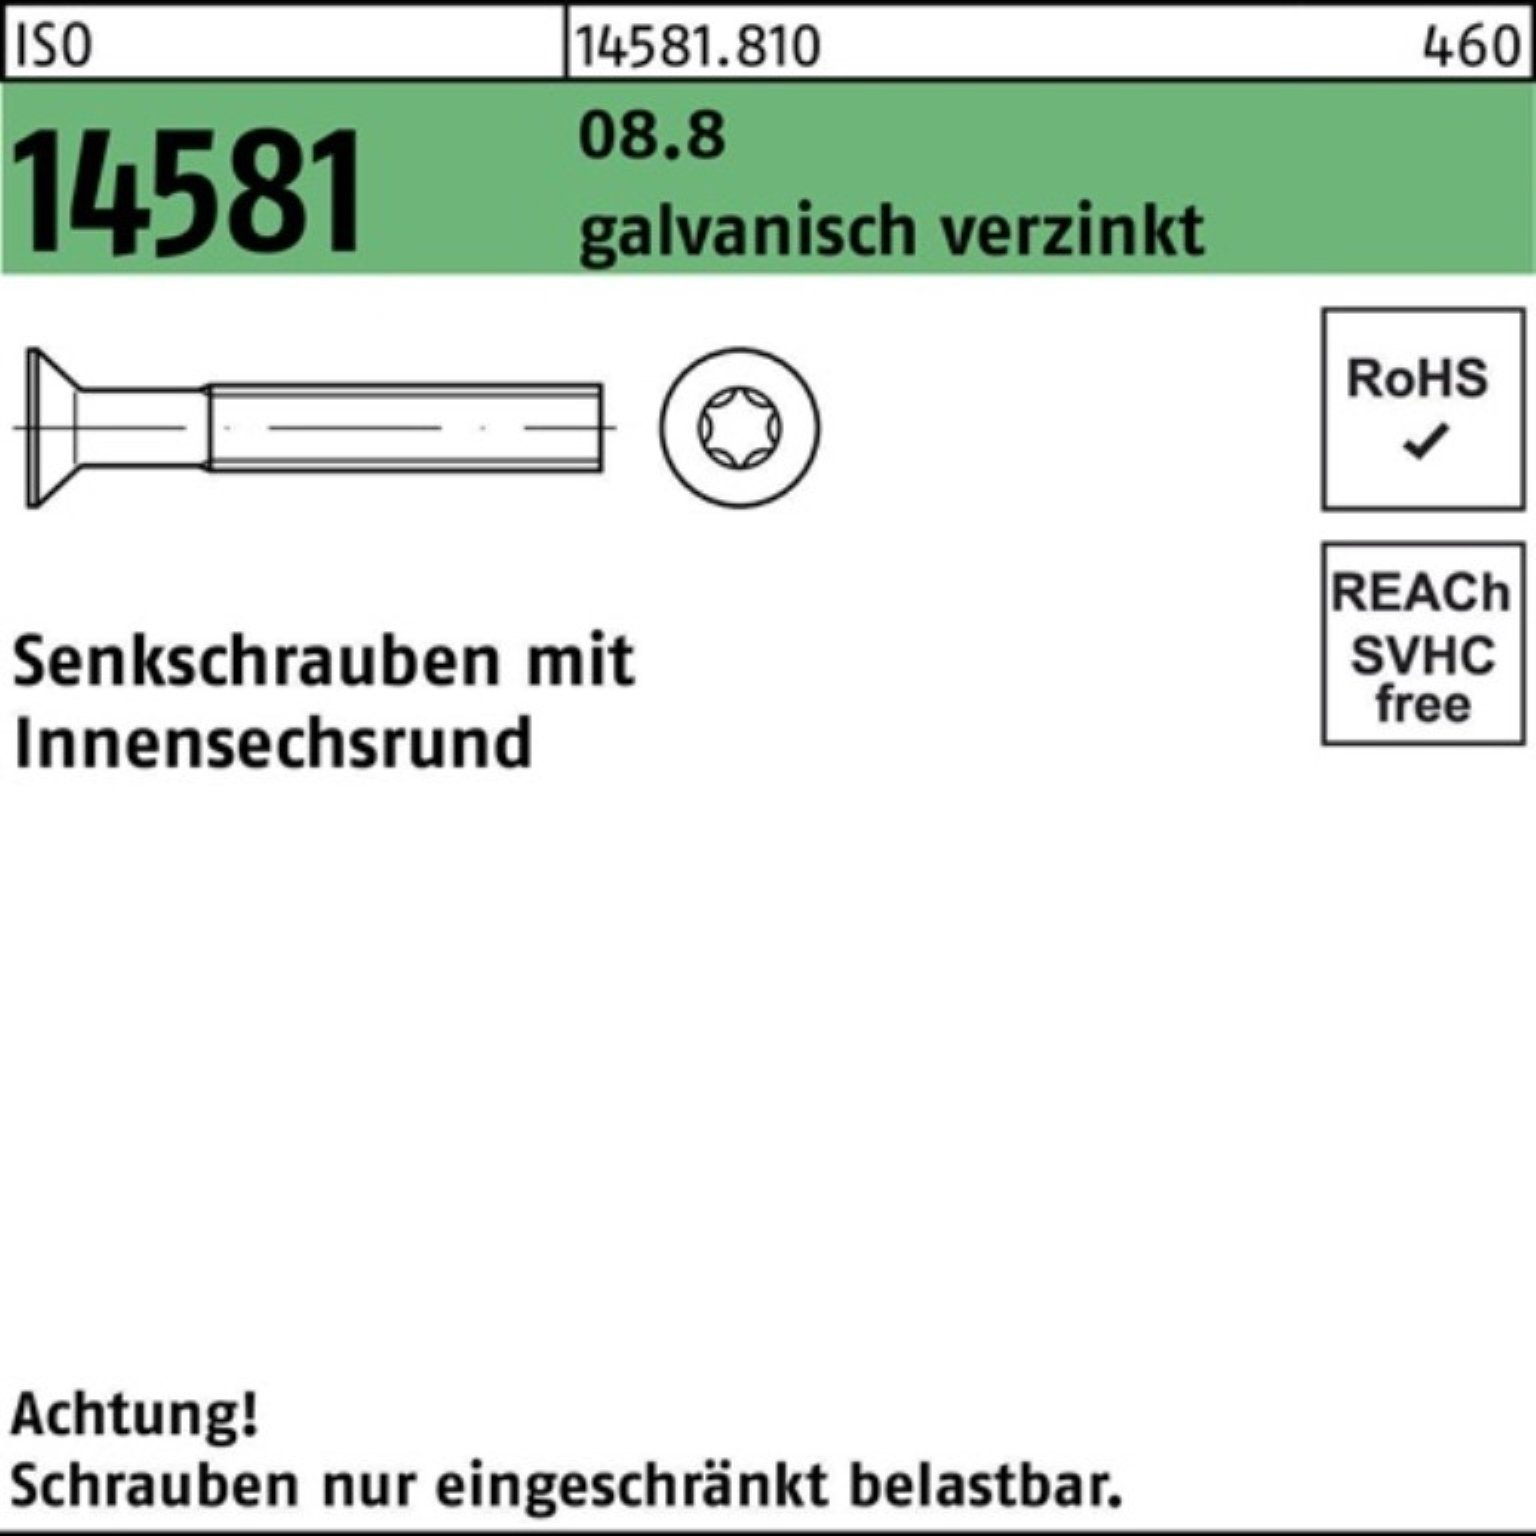 Reyher Senkschraube 200er Pack Senkschraube ISO ISR galv.verz. 8.8 M8x16 200St. T45 14581